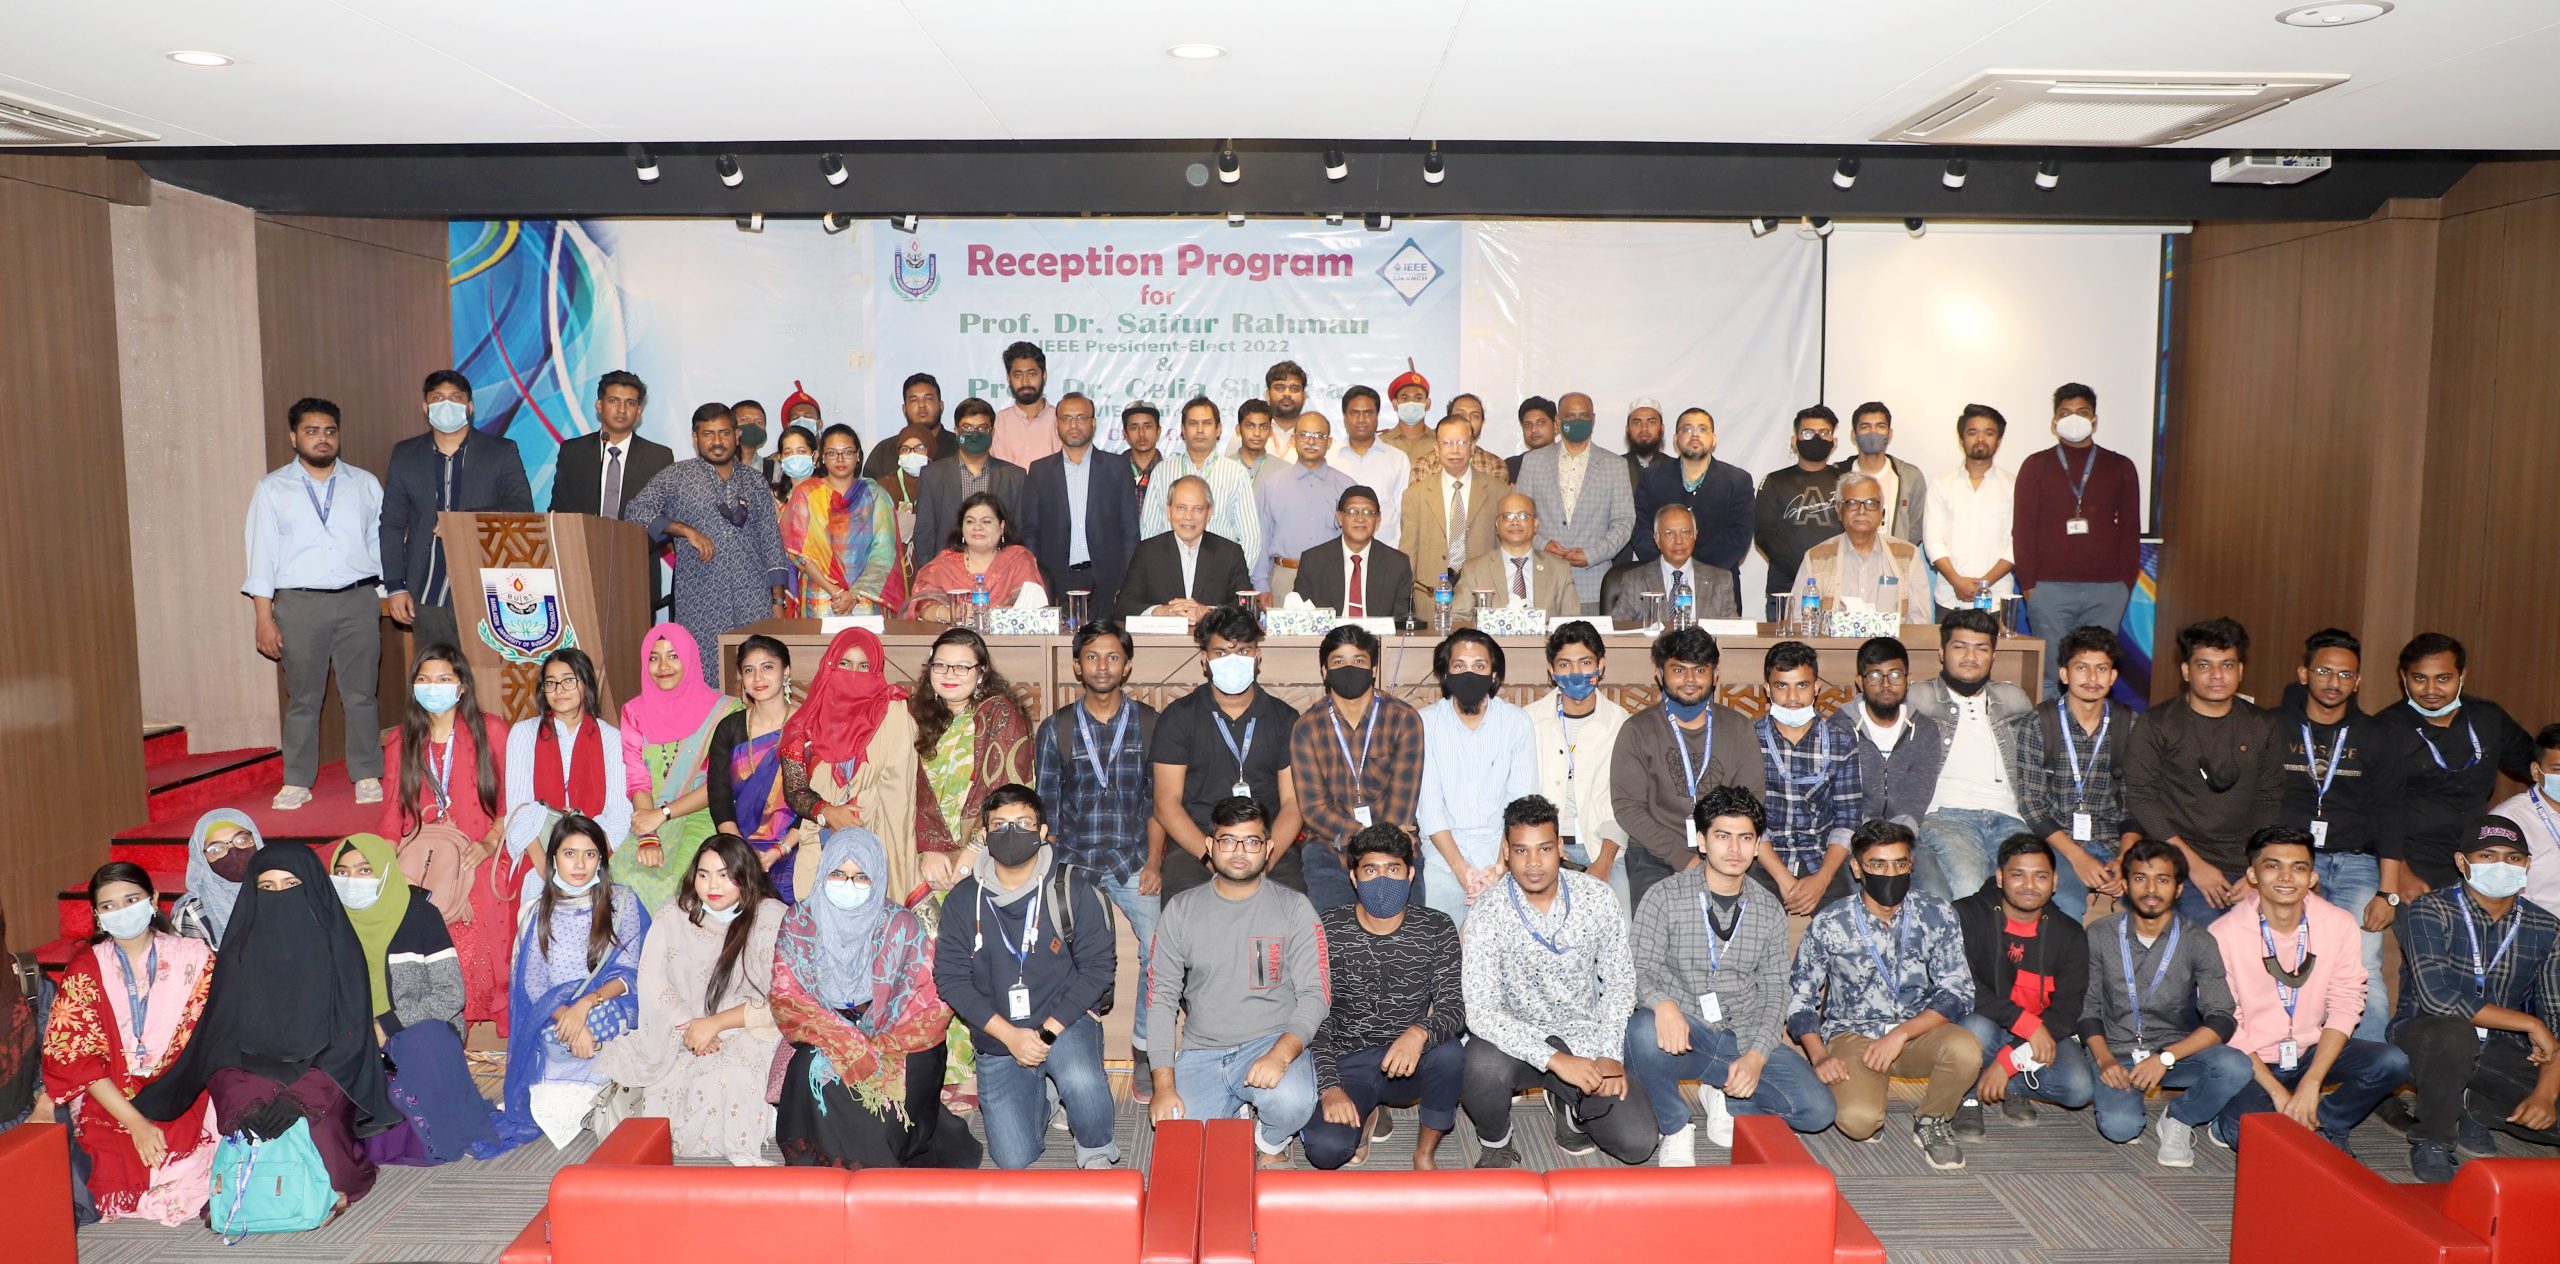 Reception Program for Prof. Dr. Saifur Rahman & Prof. Dr. Celia Shahnaz